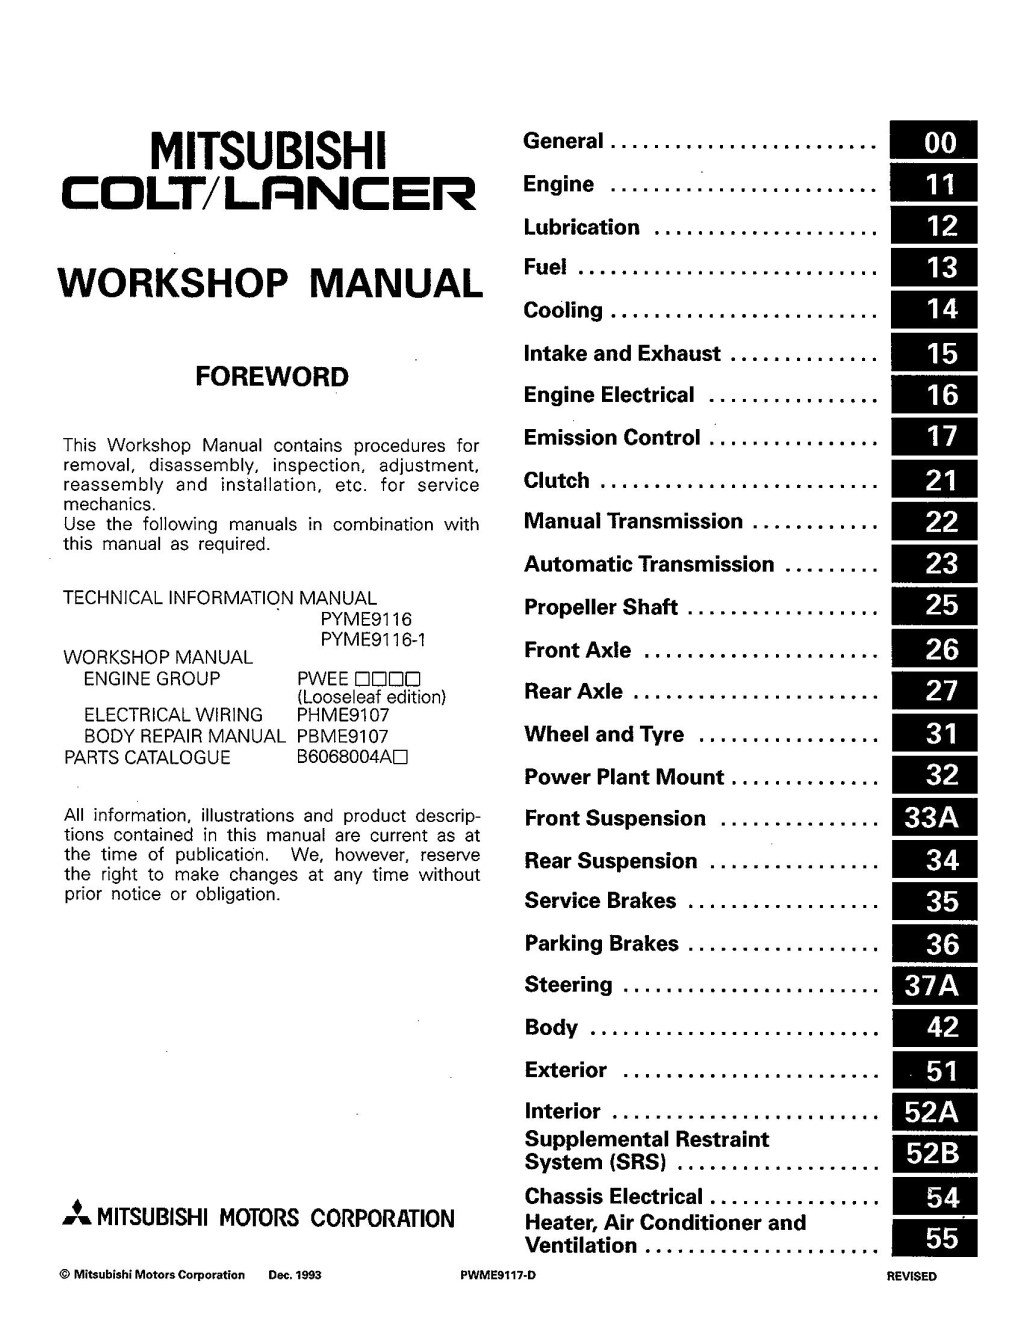 Picture of: Mitsubishi Colt Lancer Service Repair Manual by kmrdisbnvmk